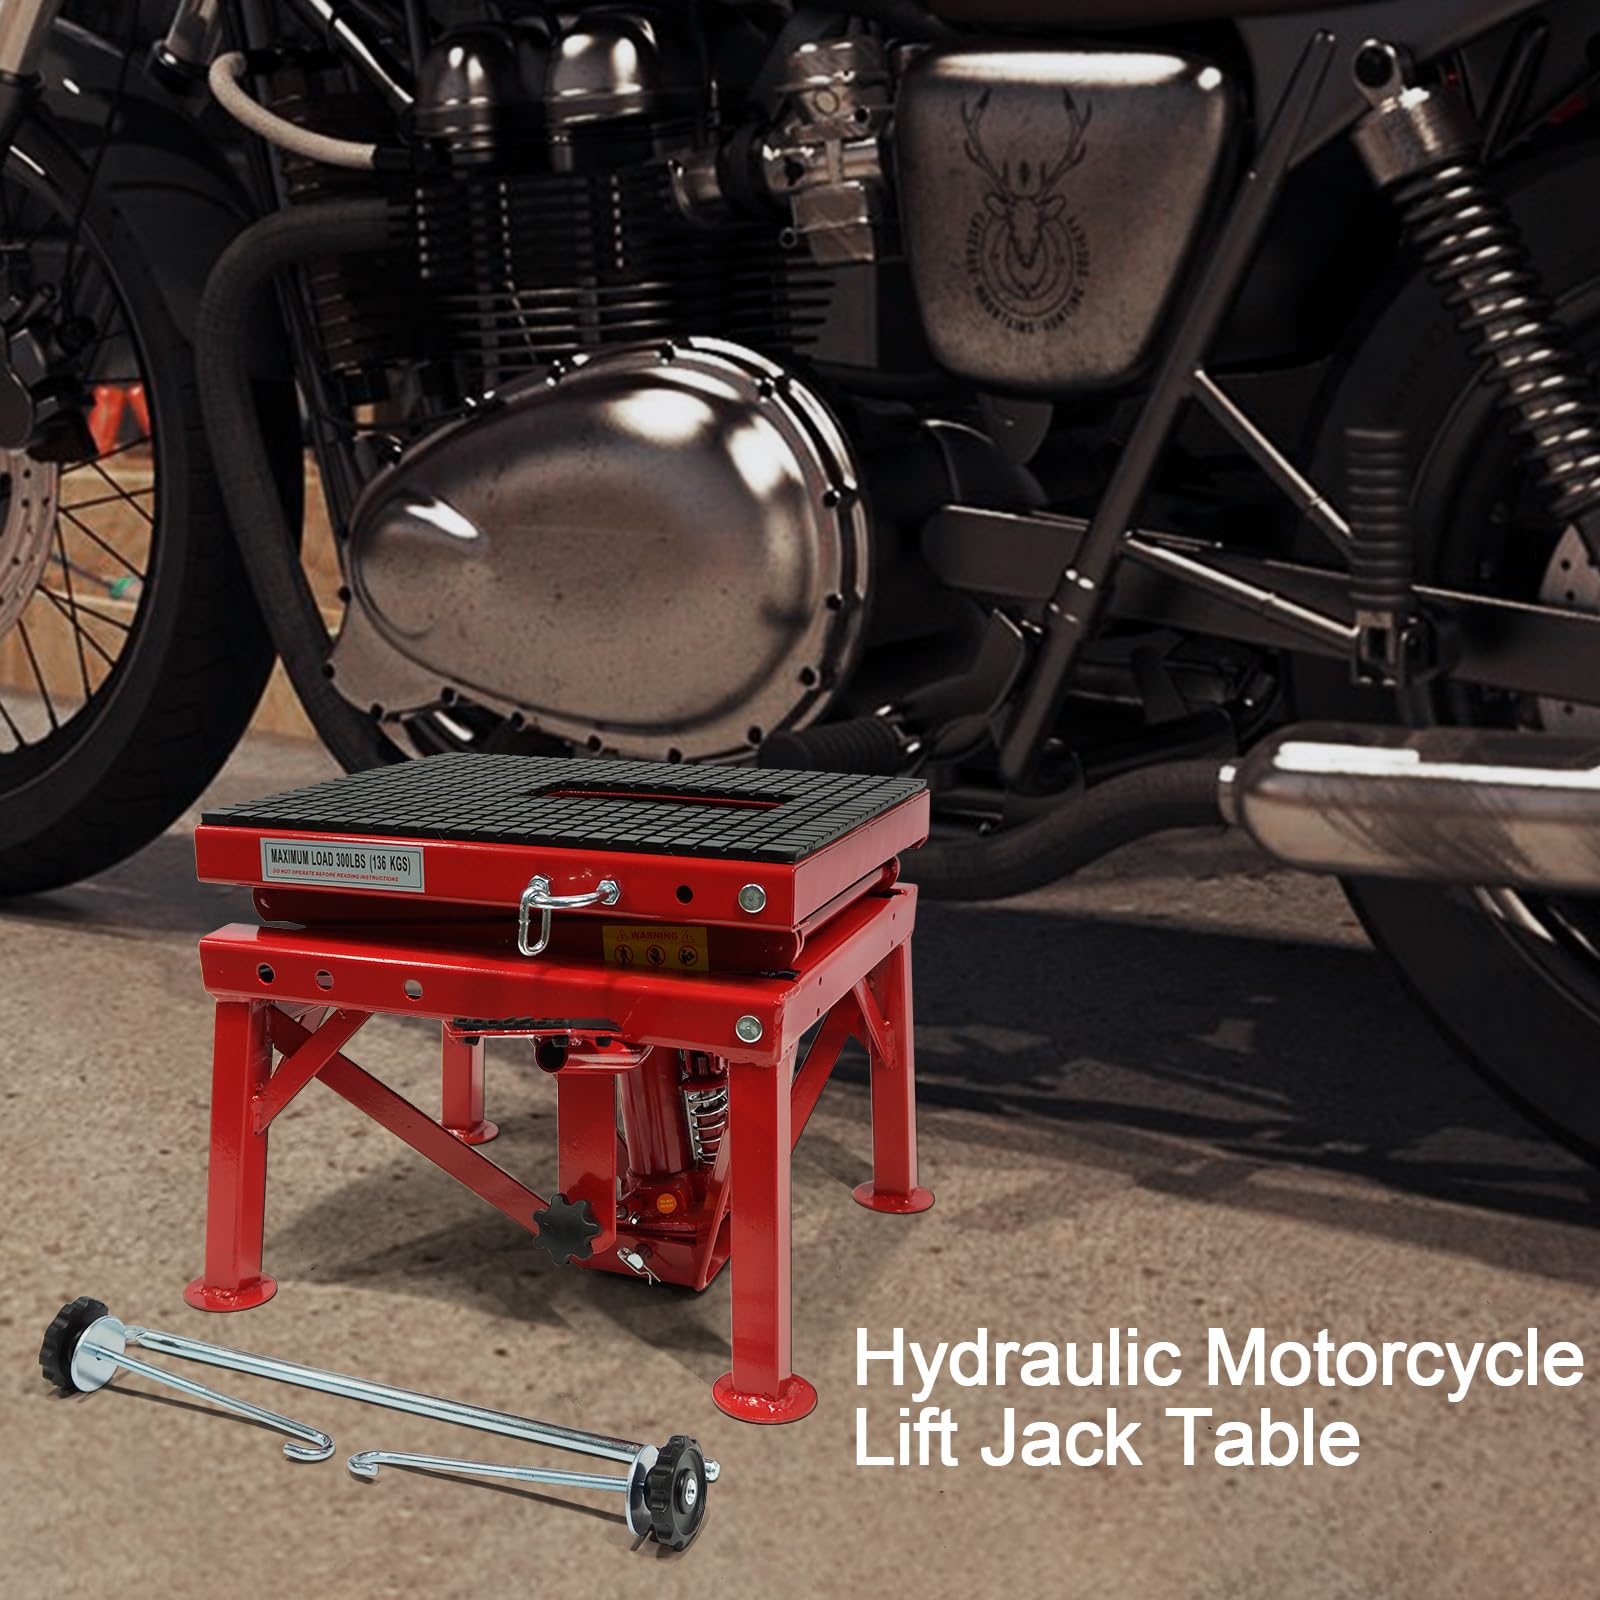 Hydraulic Motorcycle Lift Jack, MERXENG 300 LBS Capacity Steel ATV Scissor Lift Jack with Wheels for Motorcycles, Portable Motorcycle Lift Table